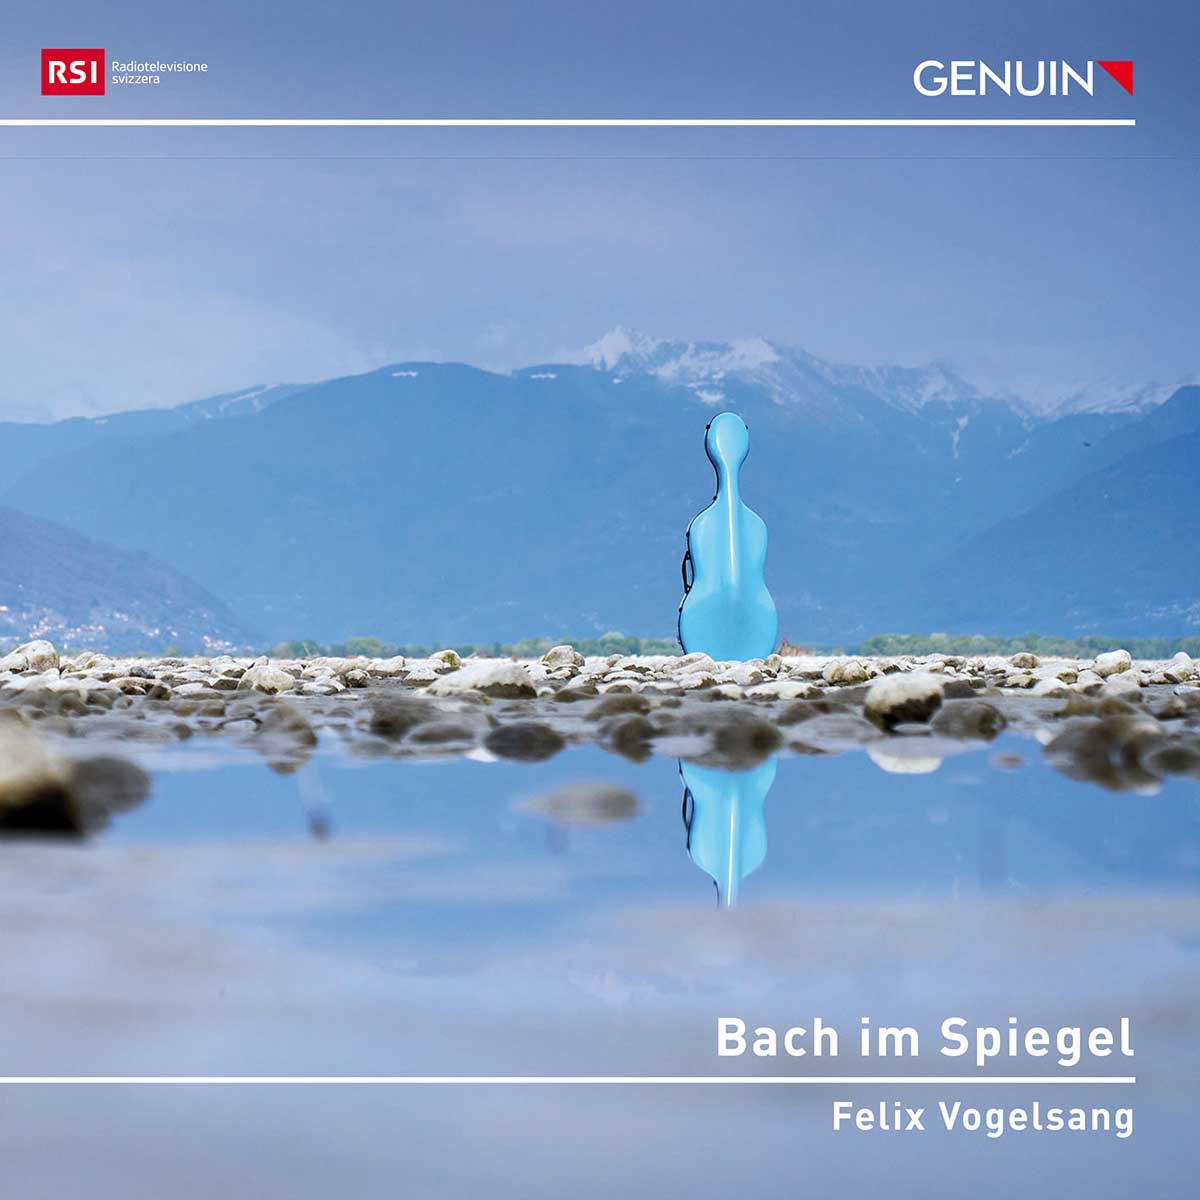 CD album cover 'Bach im Spiegel' (GEN 23821) with Felix Vogelsang